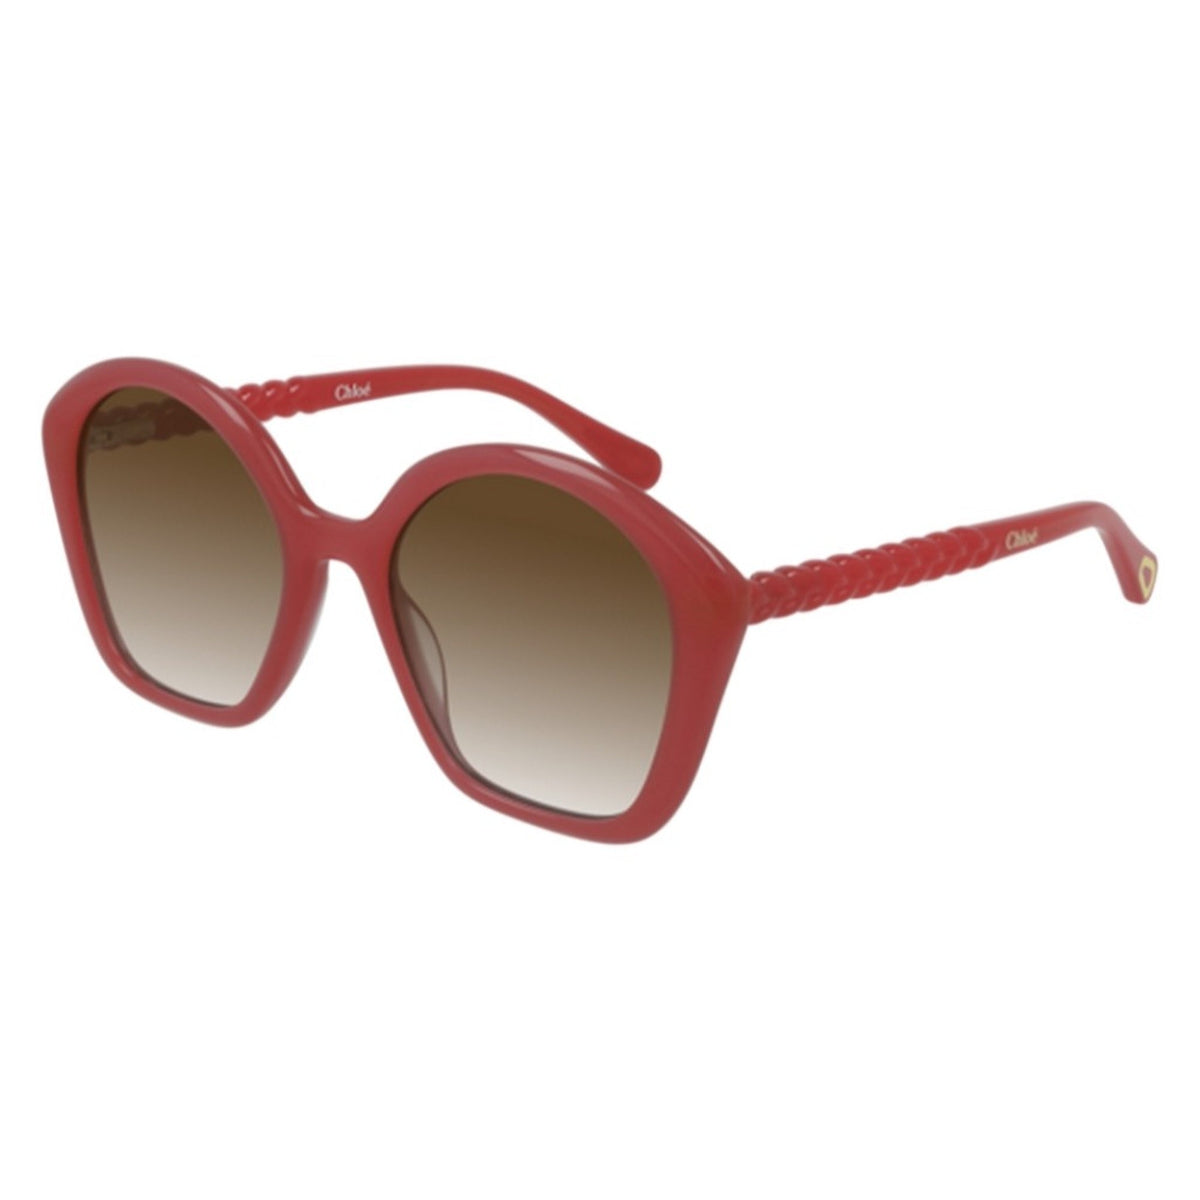 Chloé Kid Sunglasses Spring Summer 2021 Pink Brown CR 39 CR 39 Shiny CC0001S 002